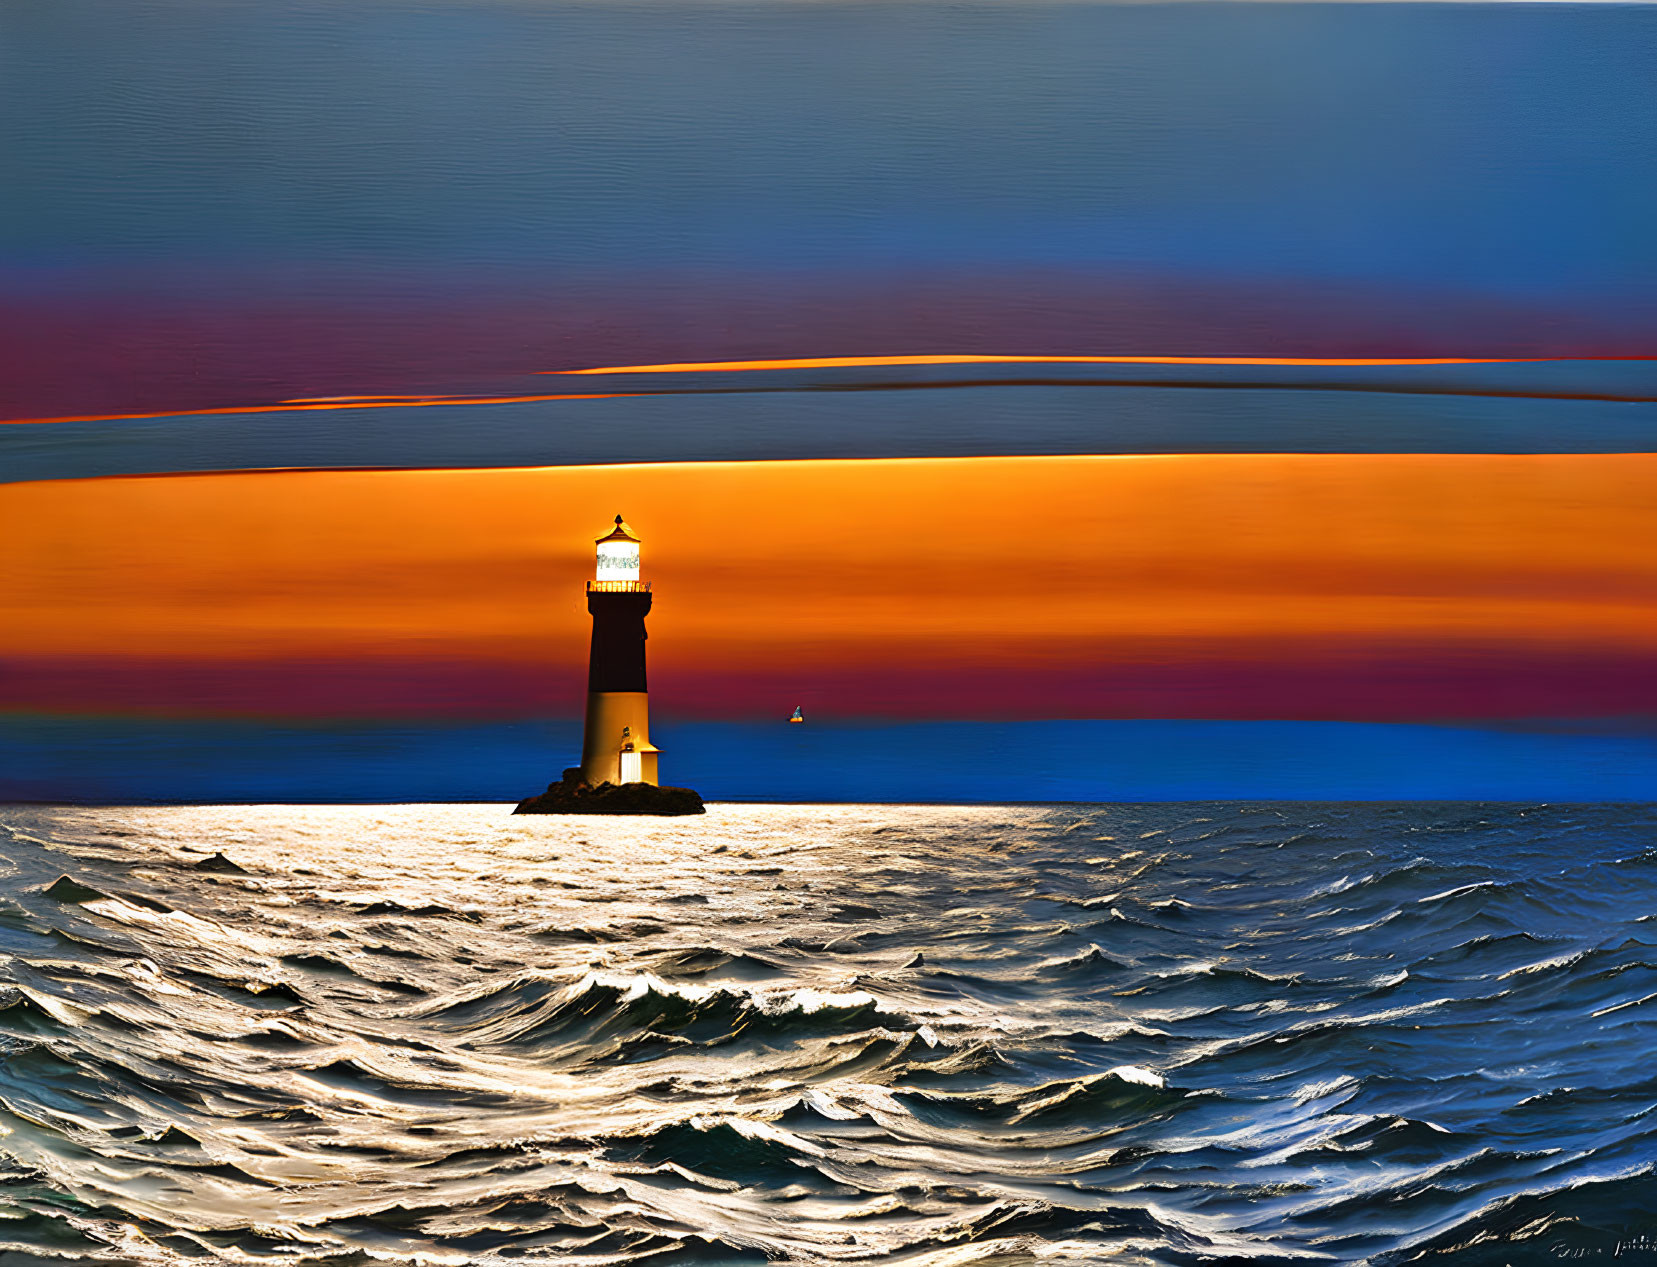 Digitally stylized image of lighthouse on rough seas at vibrant sunset